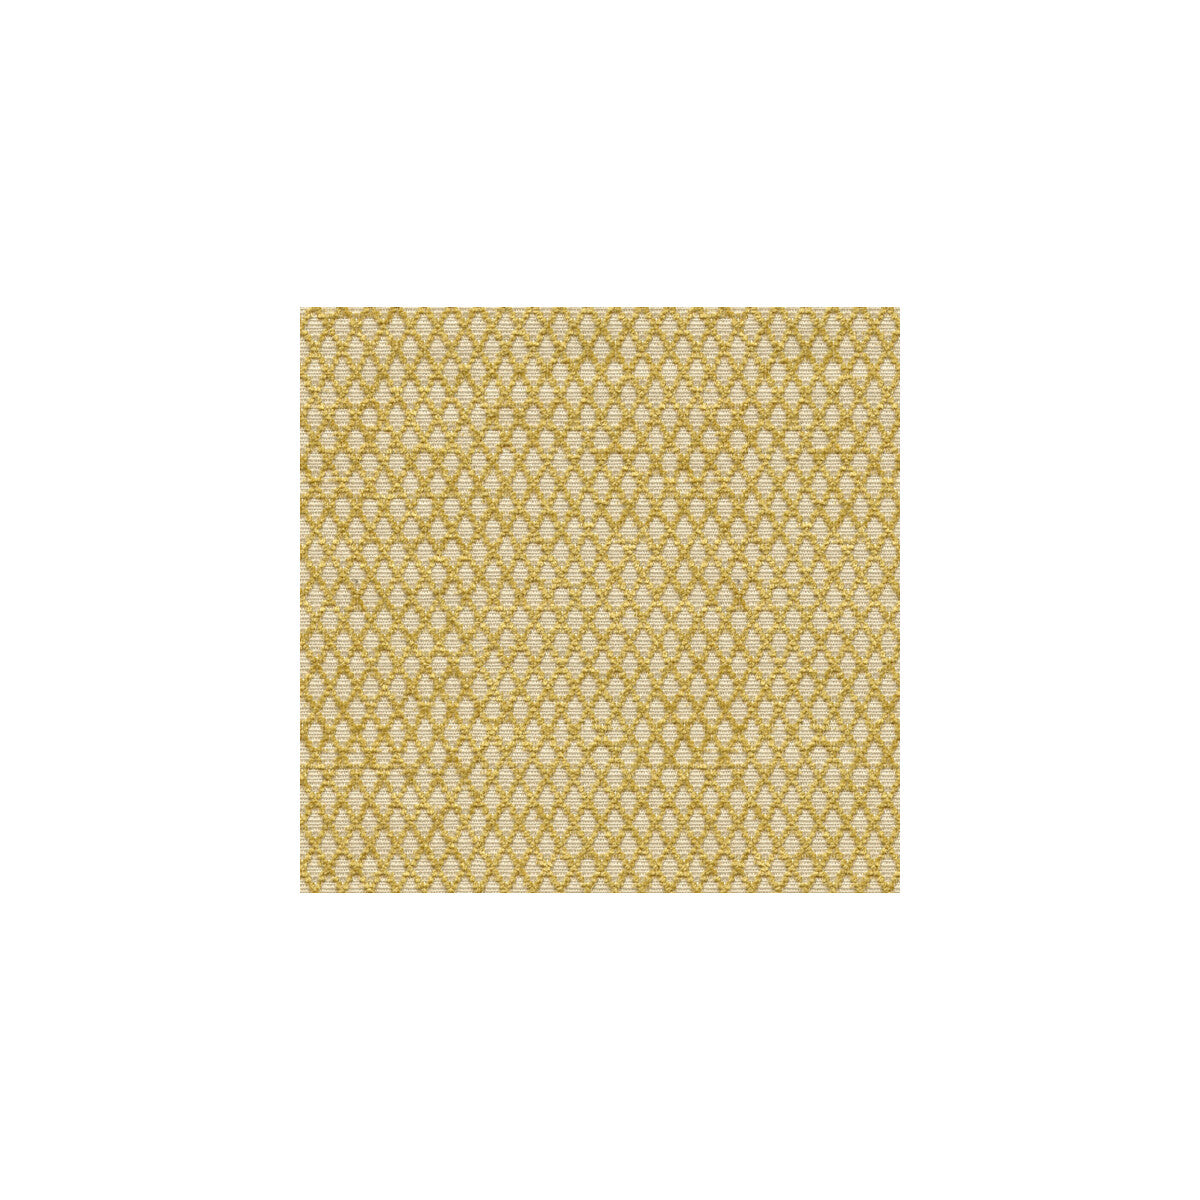 Kravet Design fabric in 31373-14 color - pattern 31373.14.0 - by Kravet Design in the Gis collection